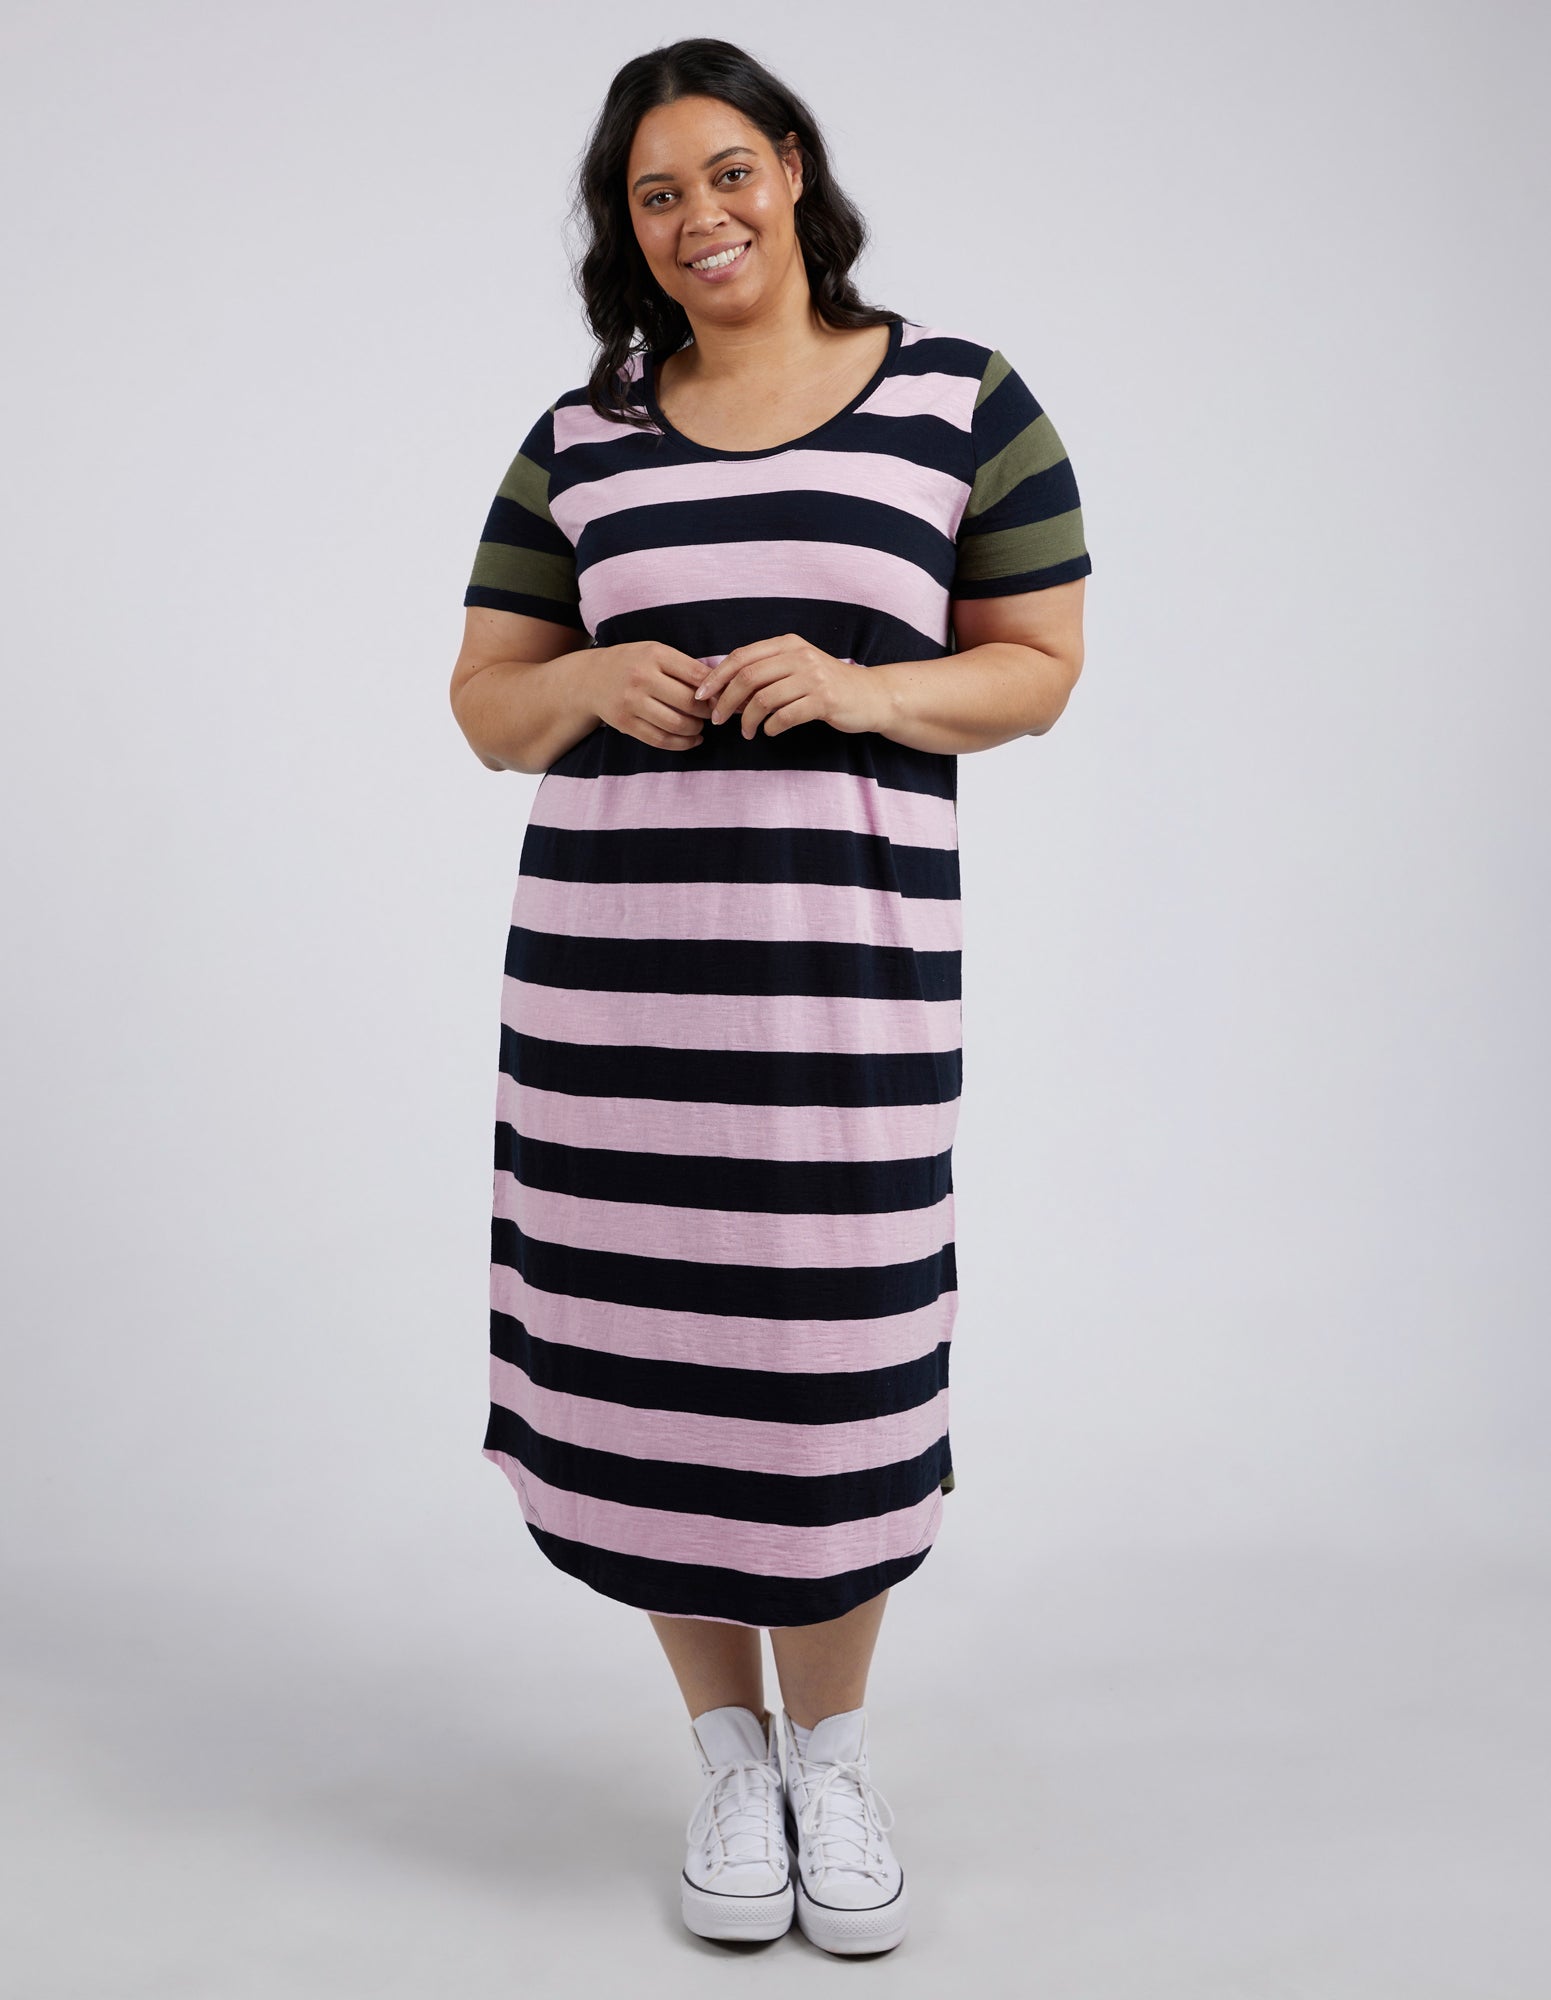 Mercury Dress Khaki, Navy & Pink Stripe